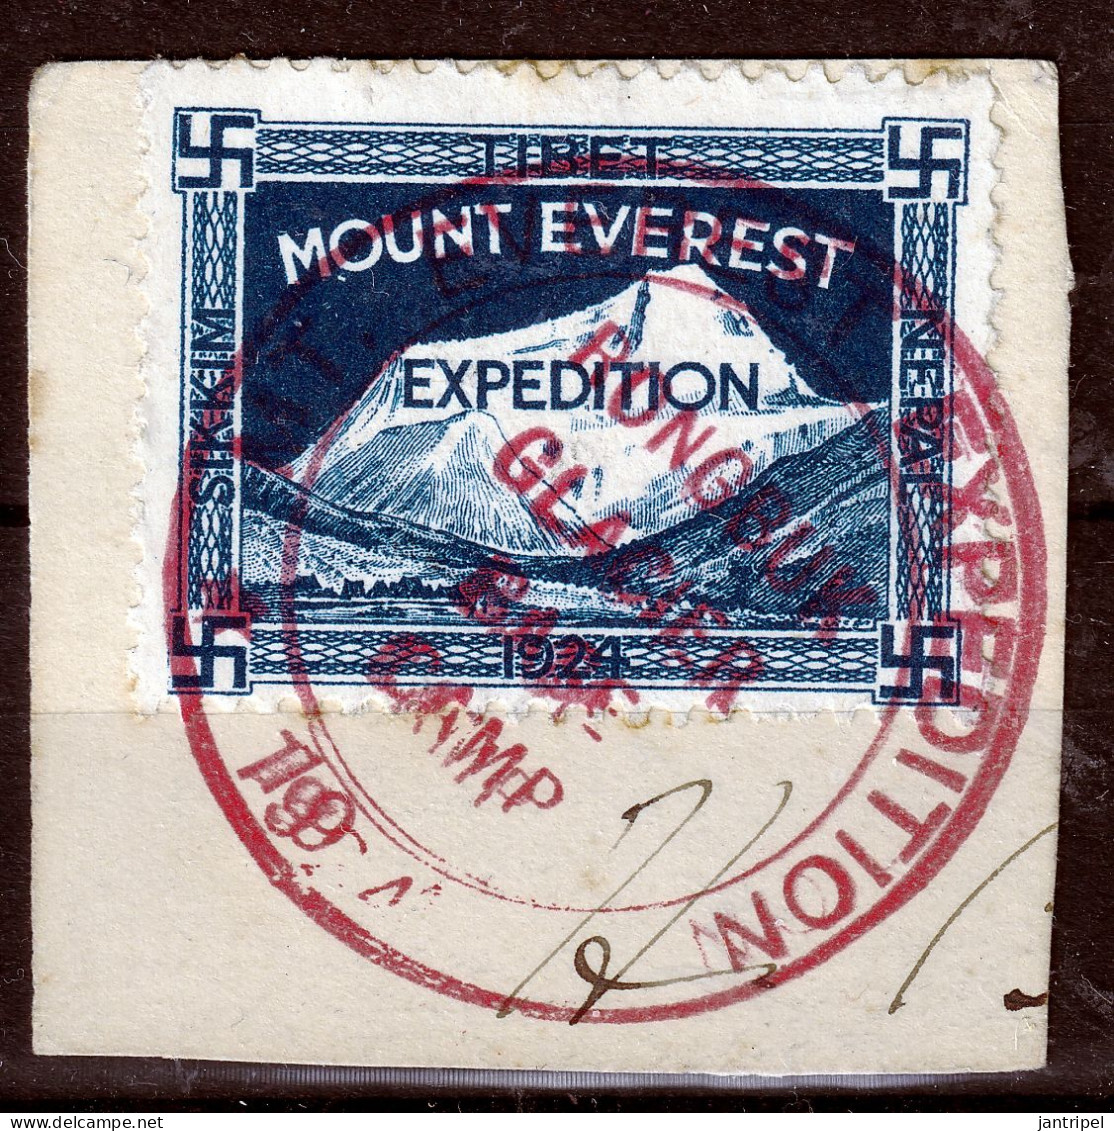 TIBET 1924 MOUNT EVEREST EXPEDITION RONGBUK GLACIER BASE CAMP CANCELLATION On COVER FRAGMENT - Sonstige - Asien